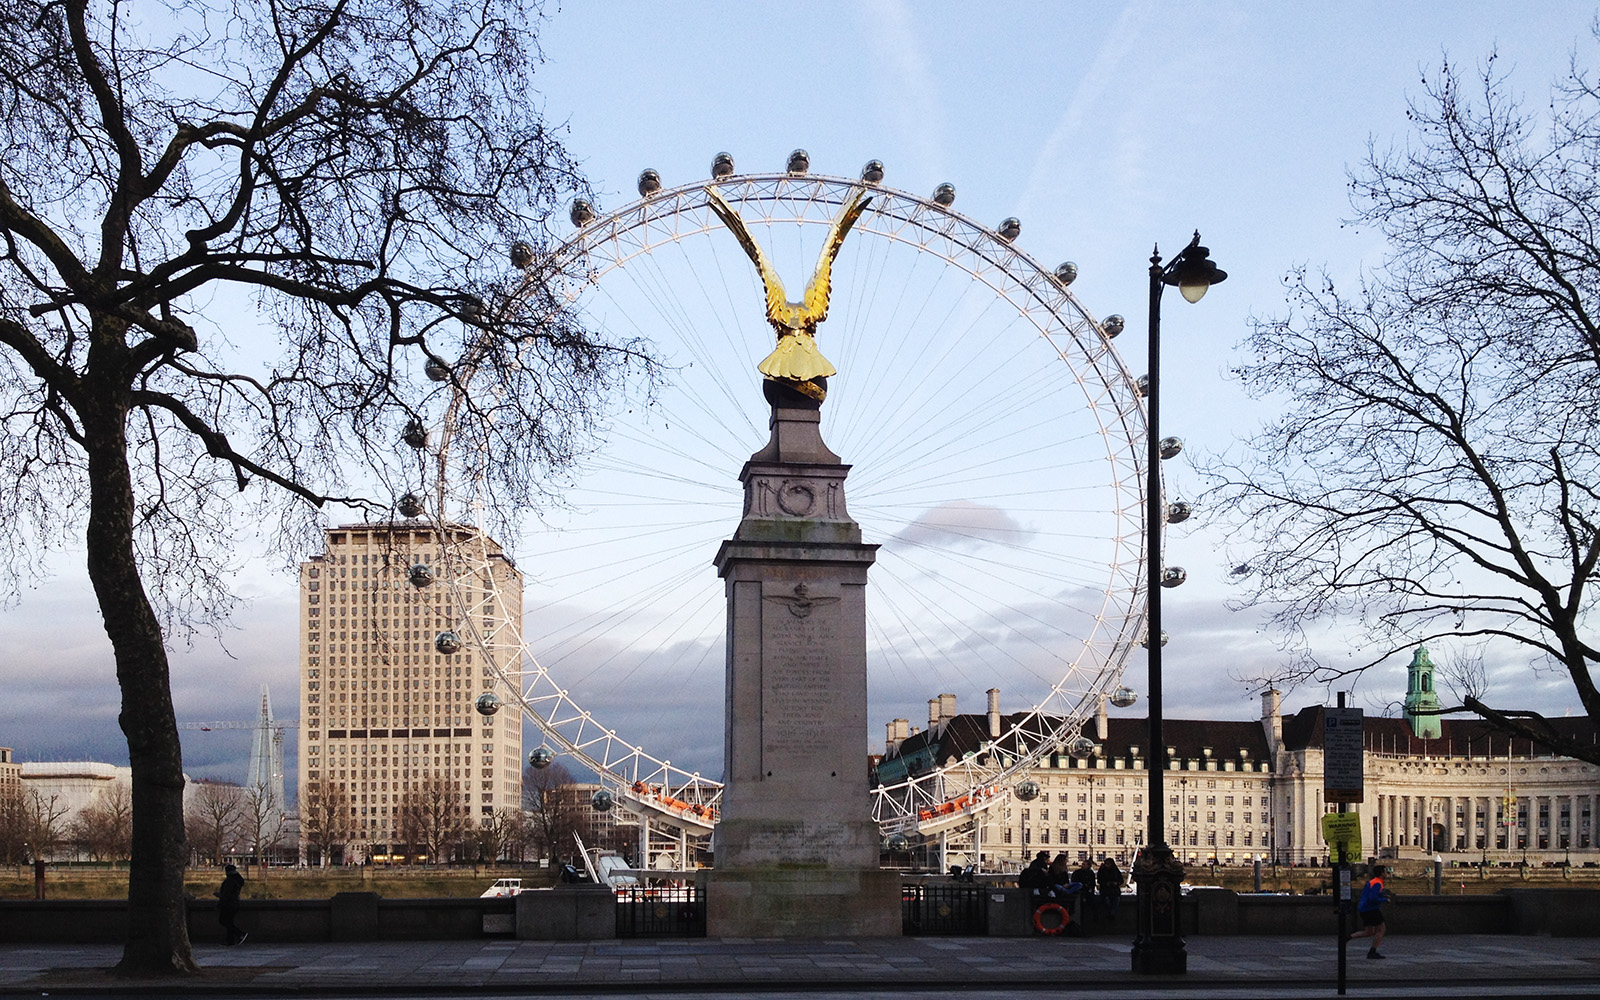 London Eye, 4 February 2016